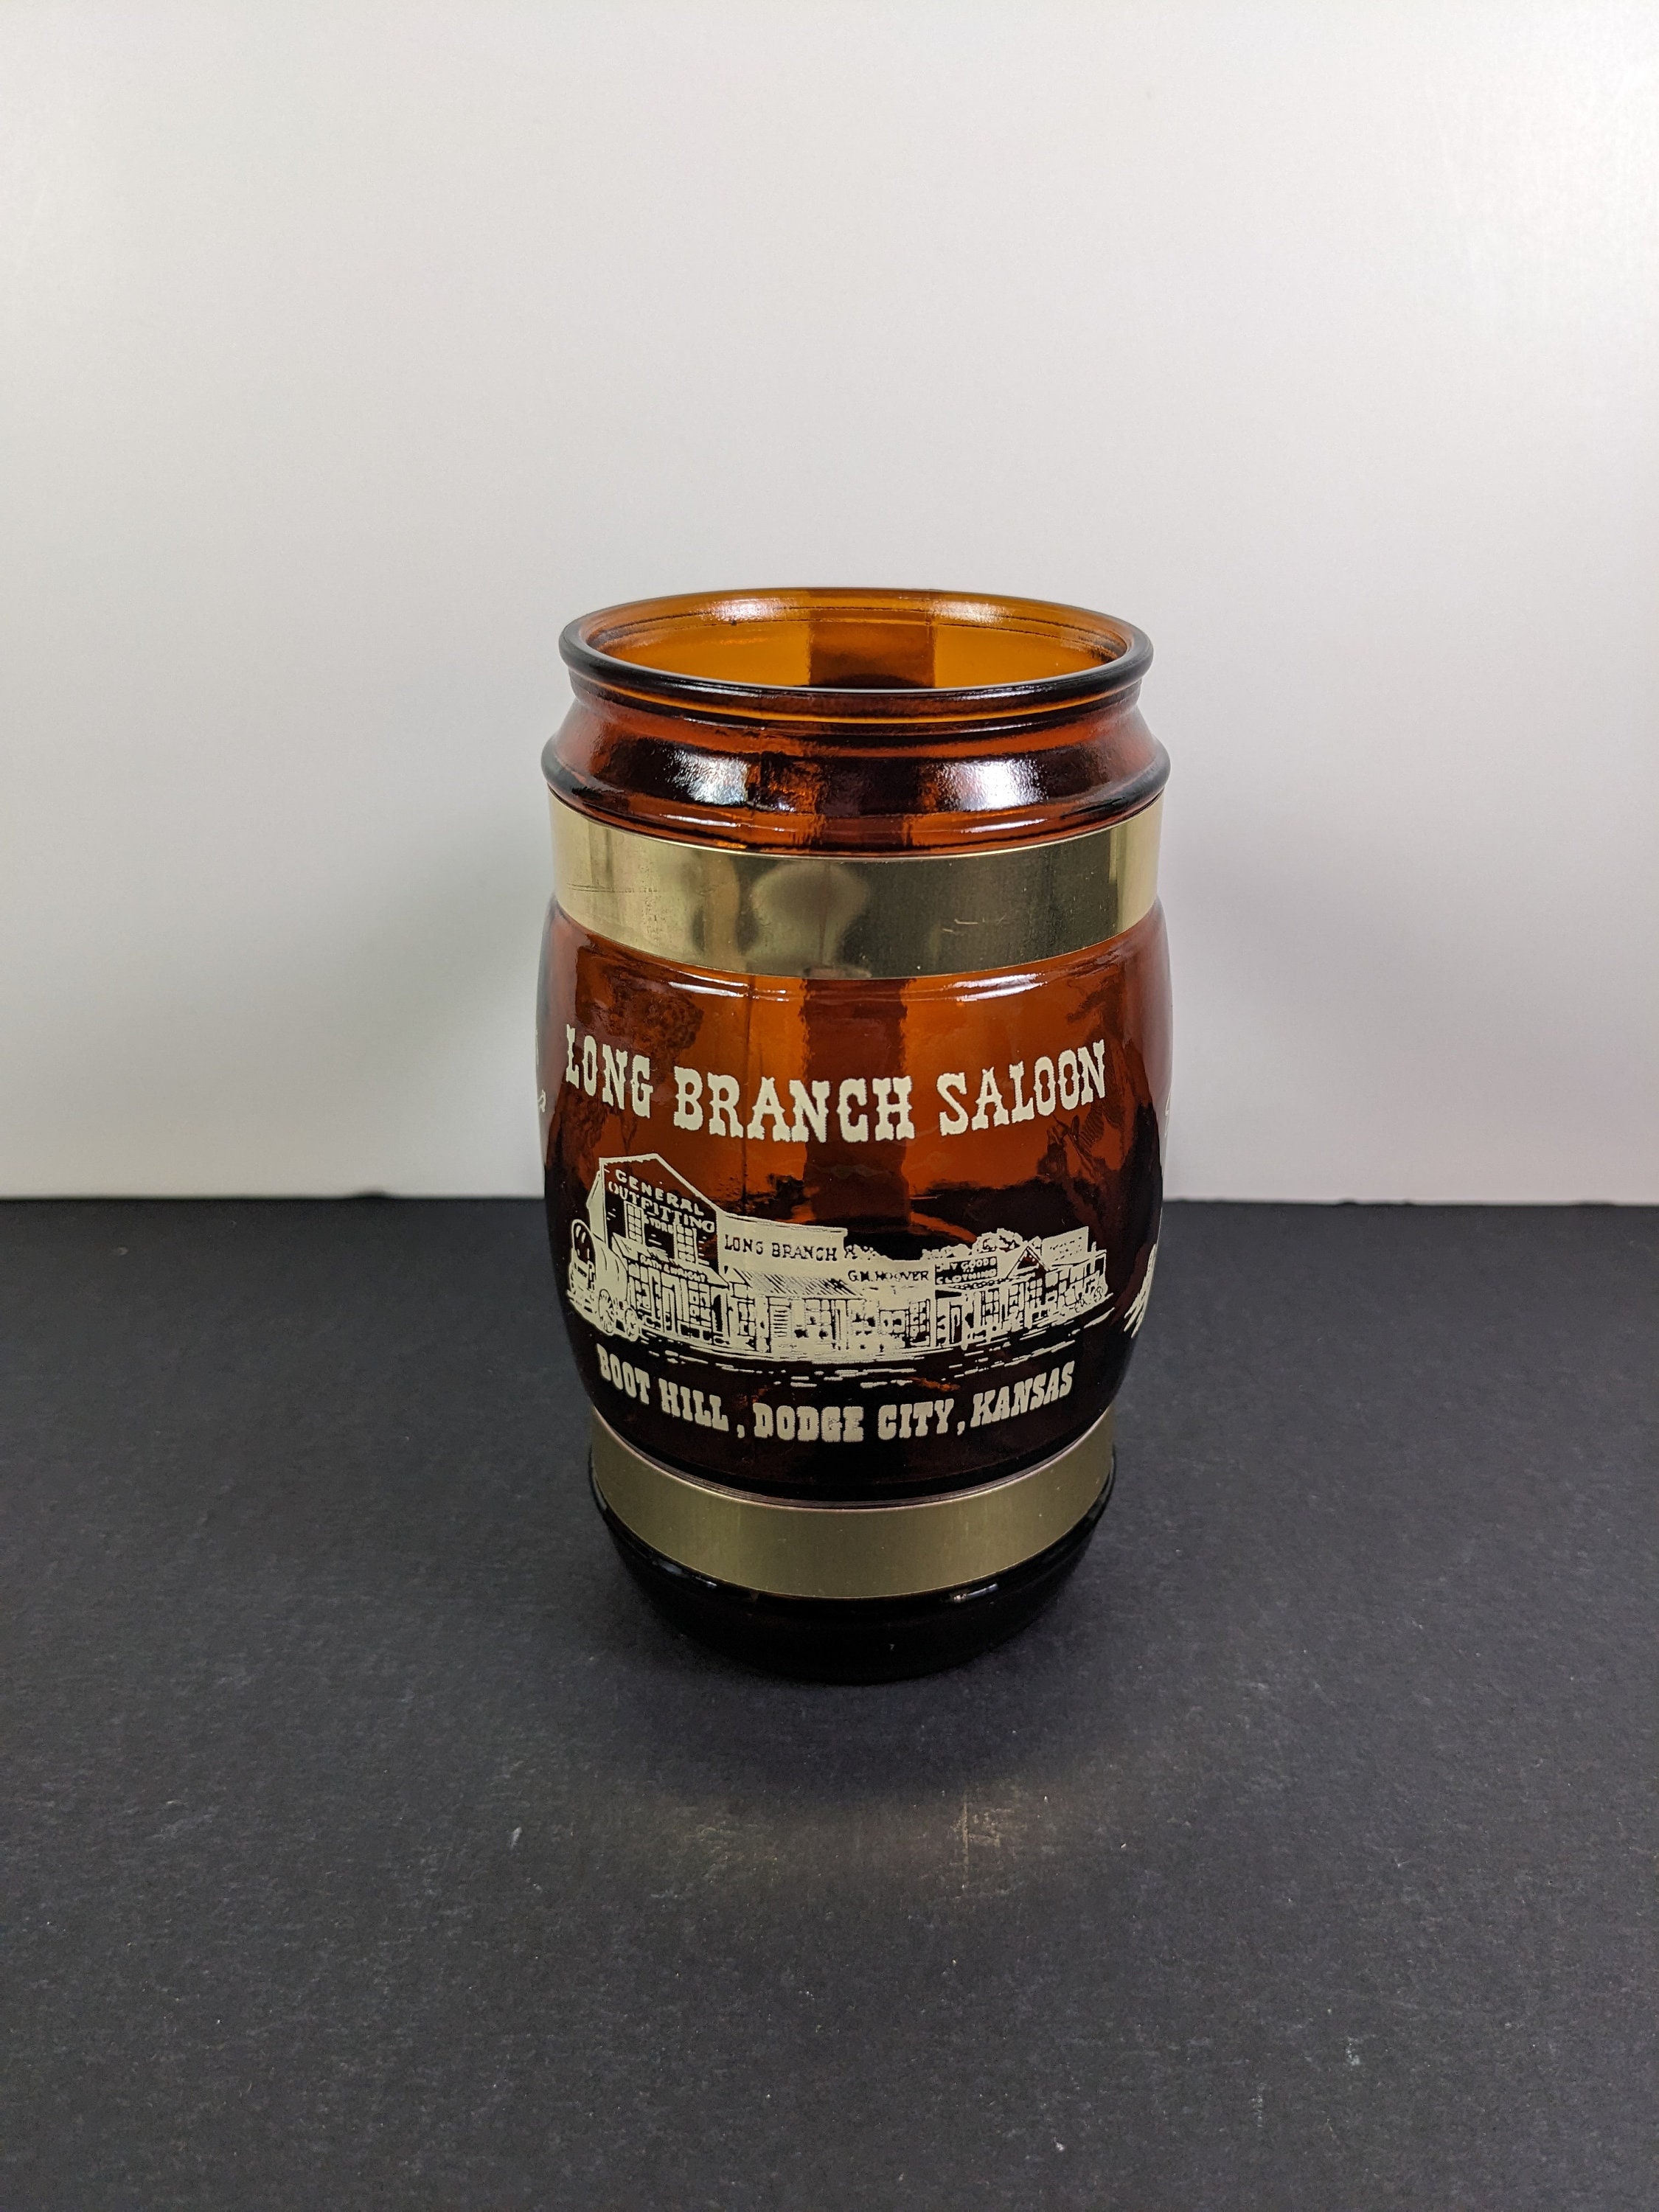 Long Branch Saloon Boot Hill Dodge City Kansas Vintage Siesta Ware Souvenir  Mug Brown Glass With Wooden Handles 